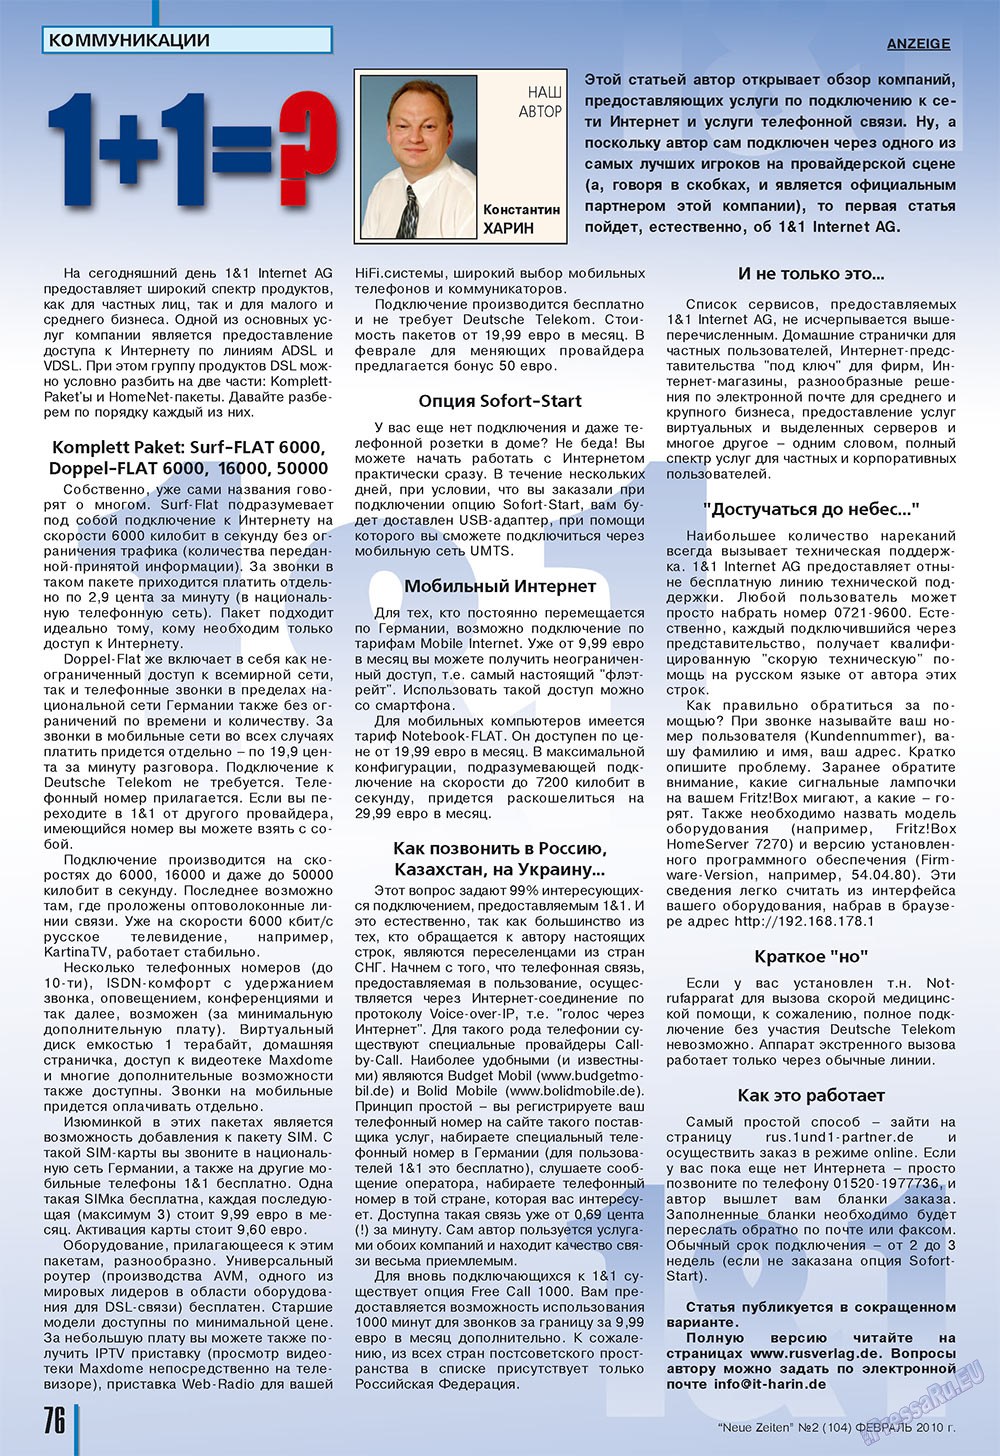 Neue Zeiten (журнал). 2010 год, номер 2, стр. 76